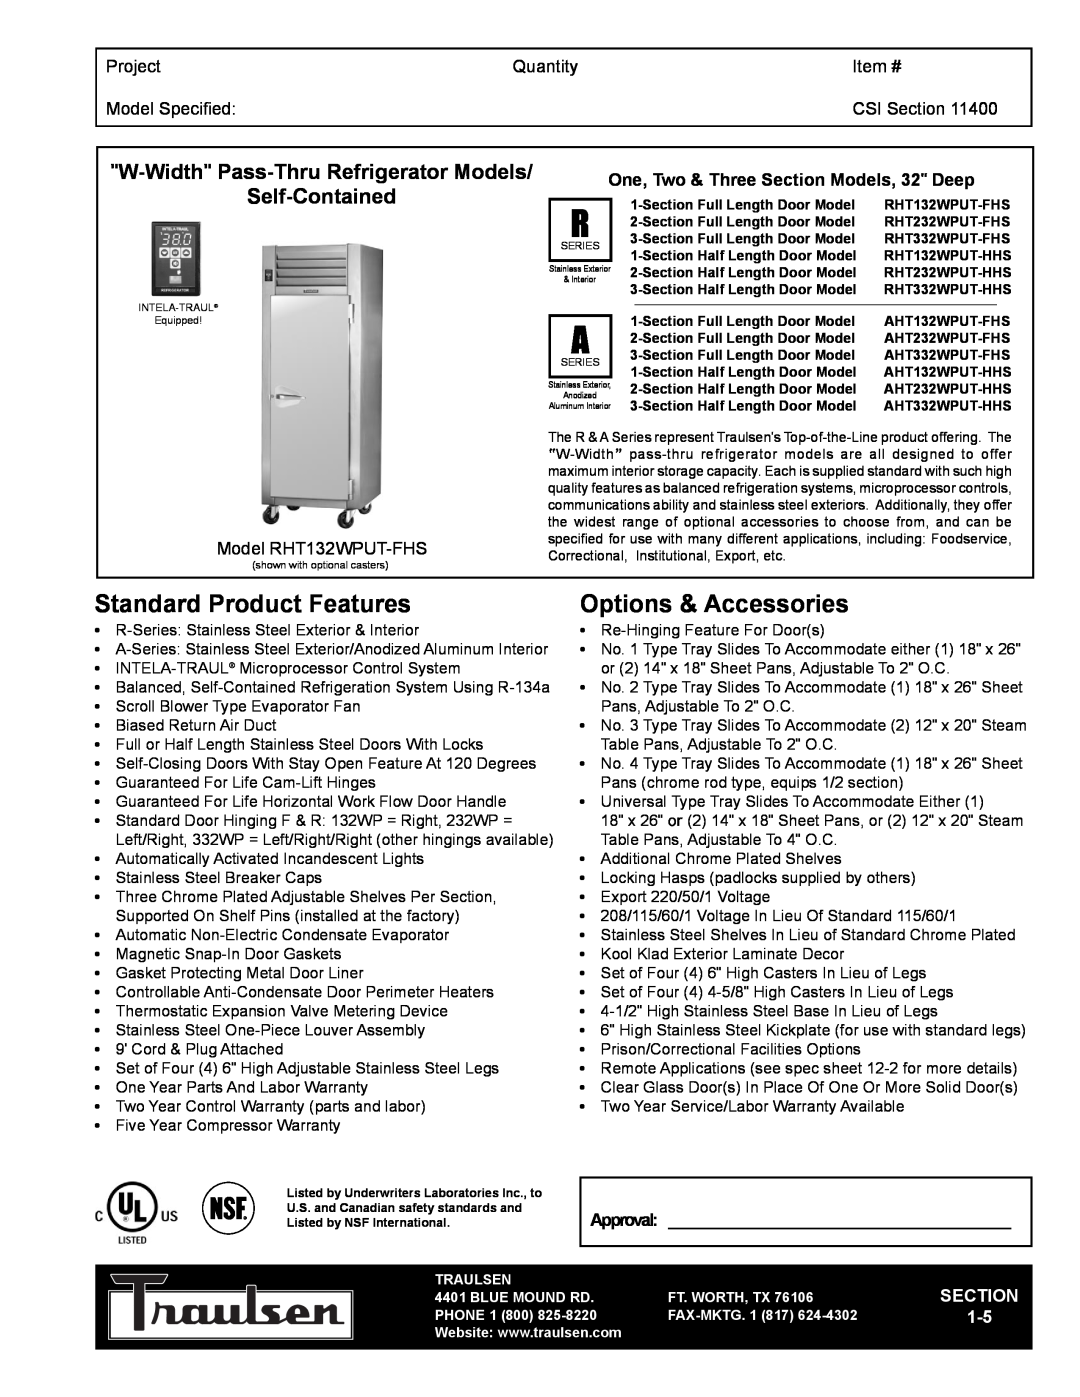 Traulsen RHT132WPUT-FHS warranty W-Width Pass-ThruRefrigerator Models, Project, Quantity, Item #, Model Specified, Section 